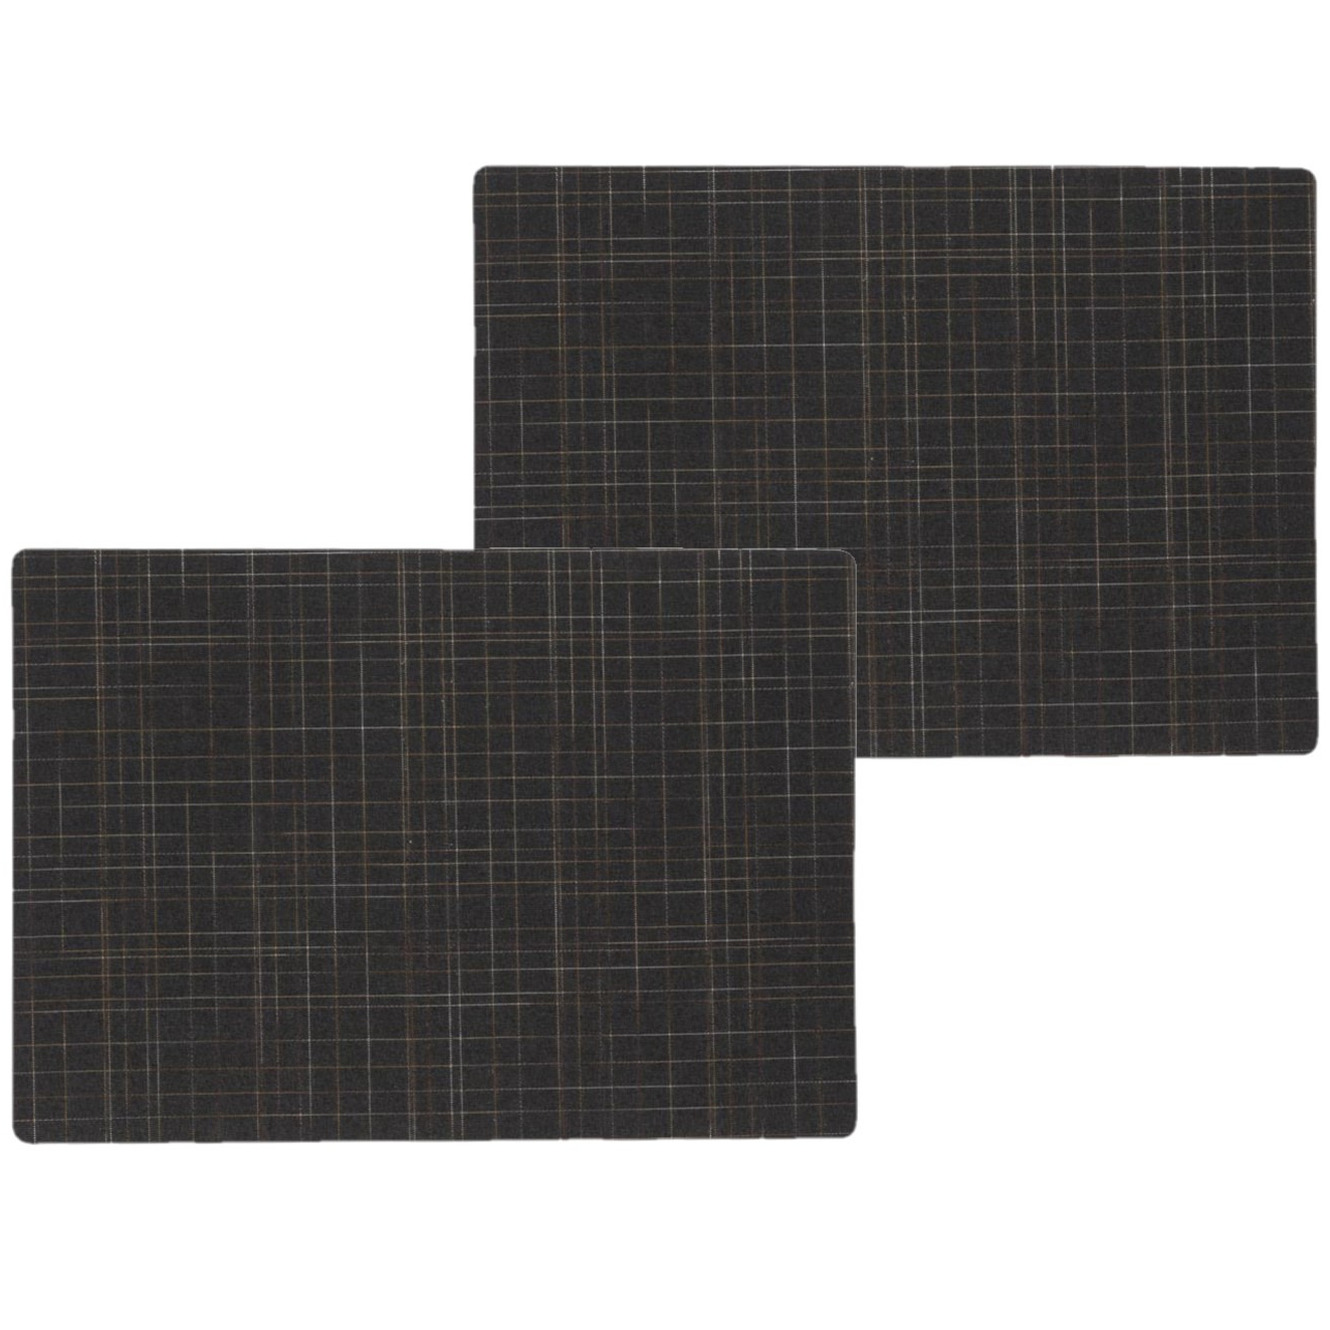 Wicotex 10x stuks stevige luxe Tafel placemats Liso zwart 30 x 43 cm -